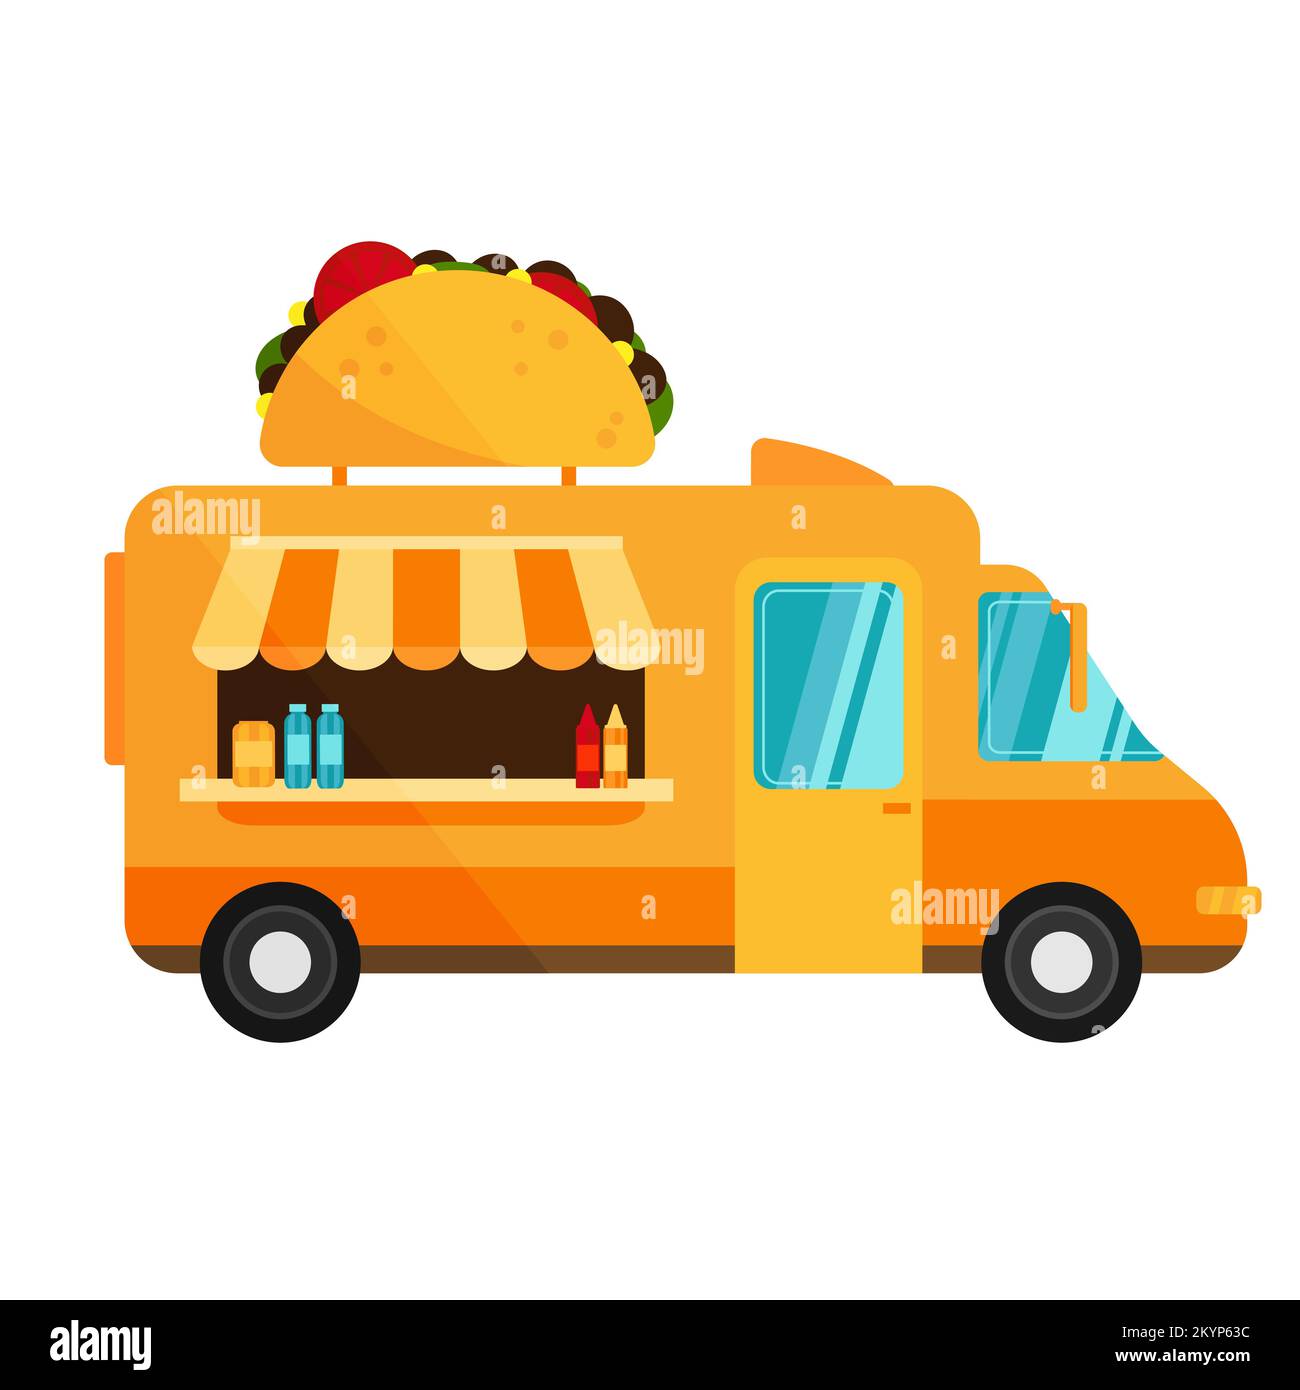 Taco truck. Street fast food truck, takeaway restaurant, market in street isolated vector illustration in flat cartoon style. Stock Vector